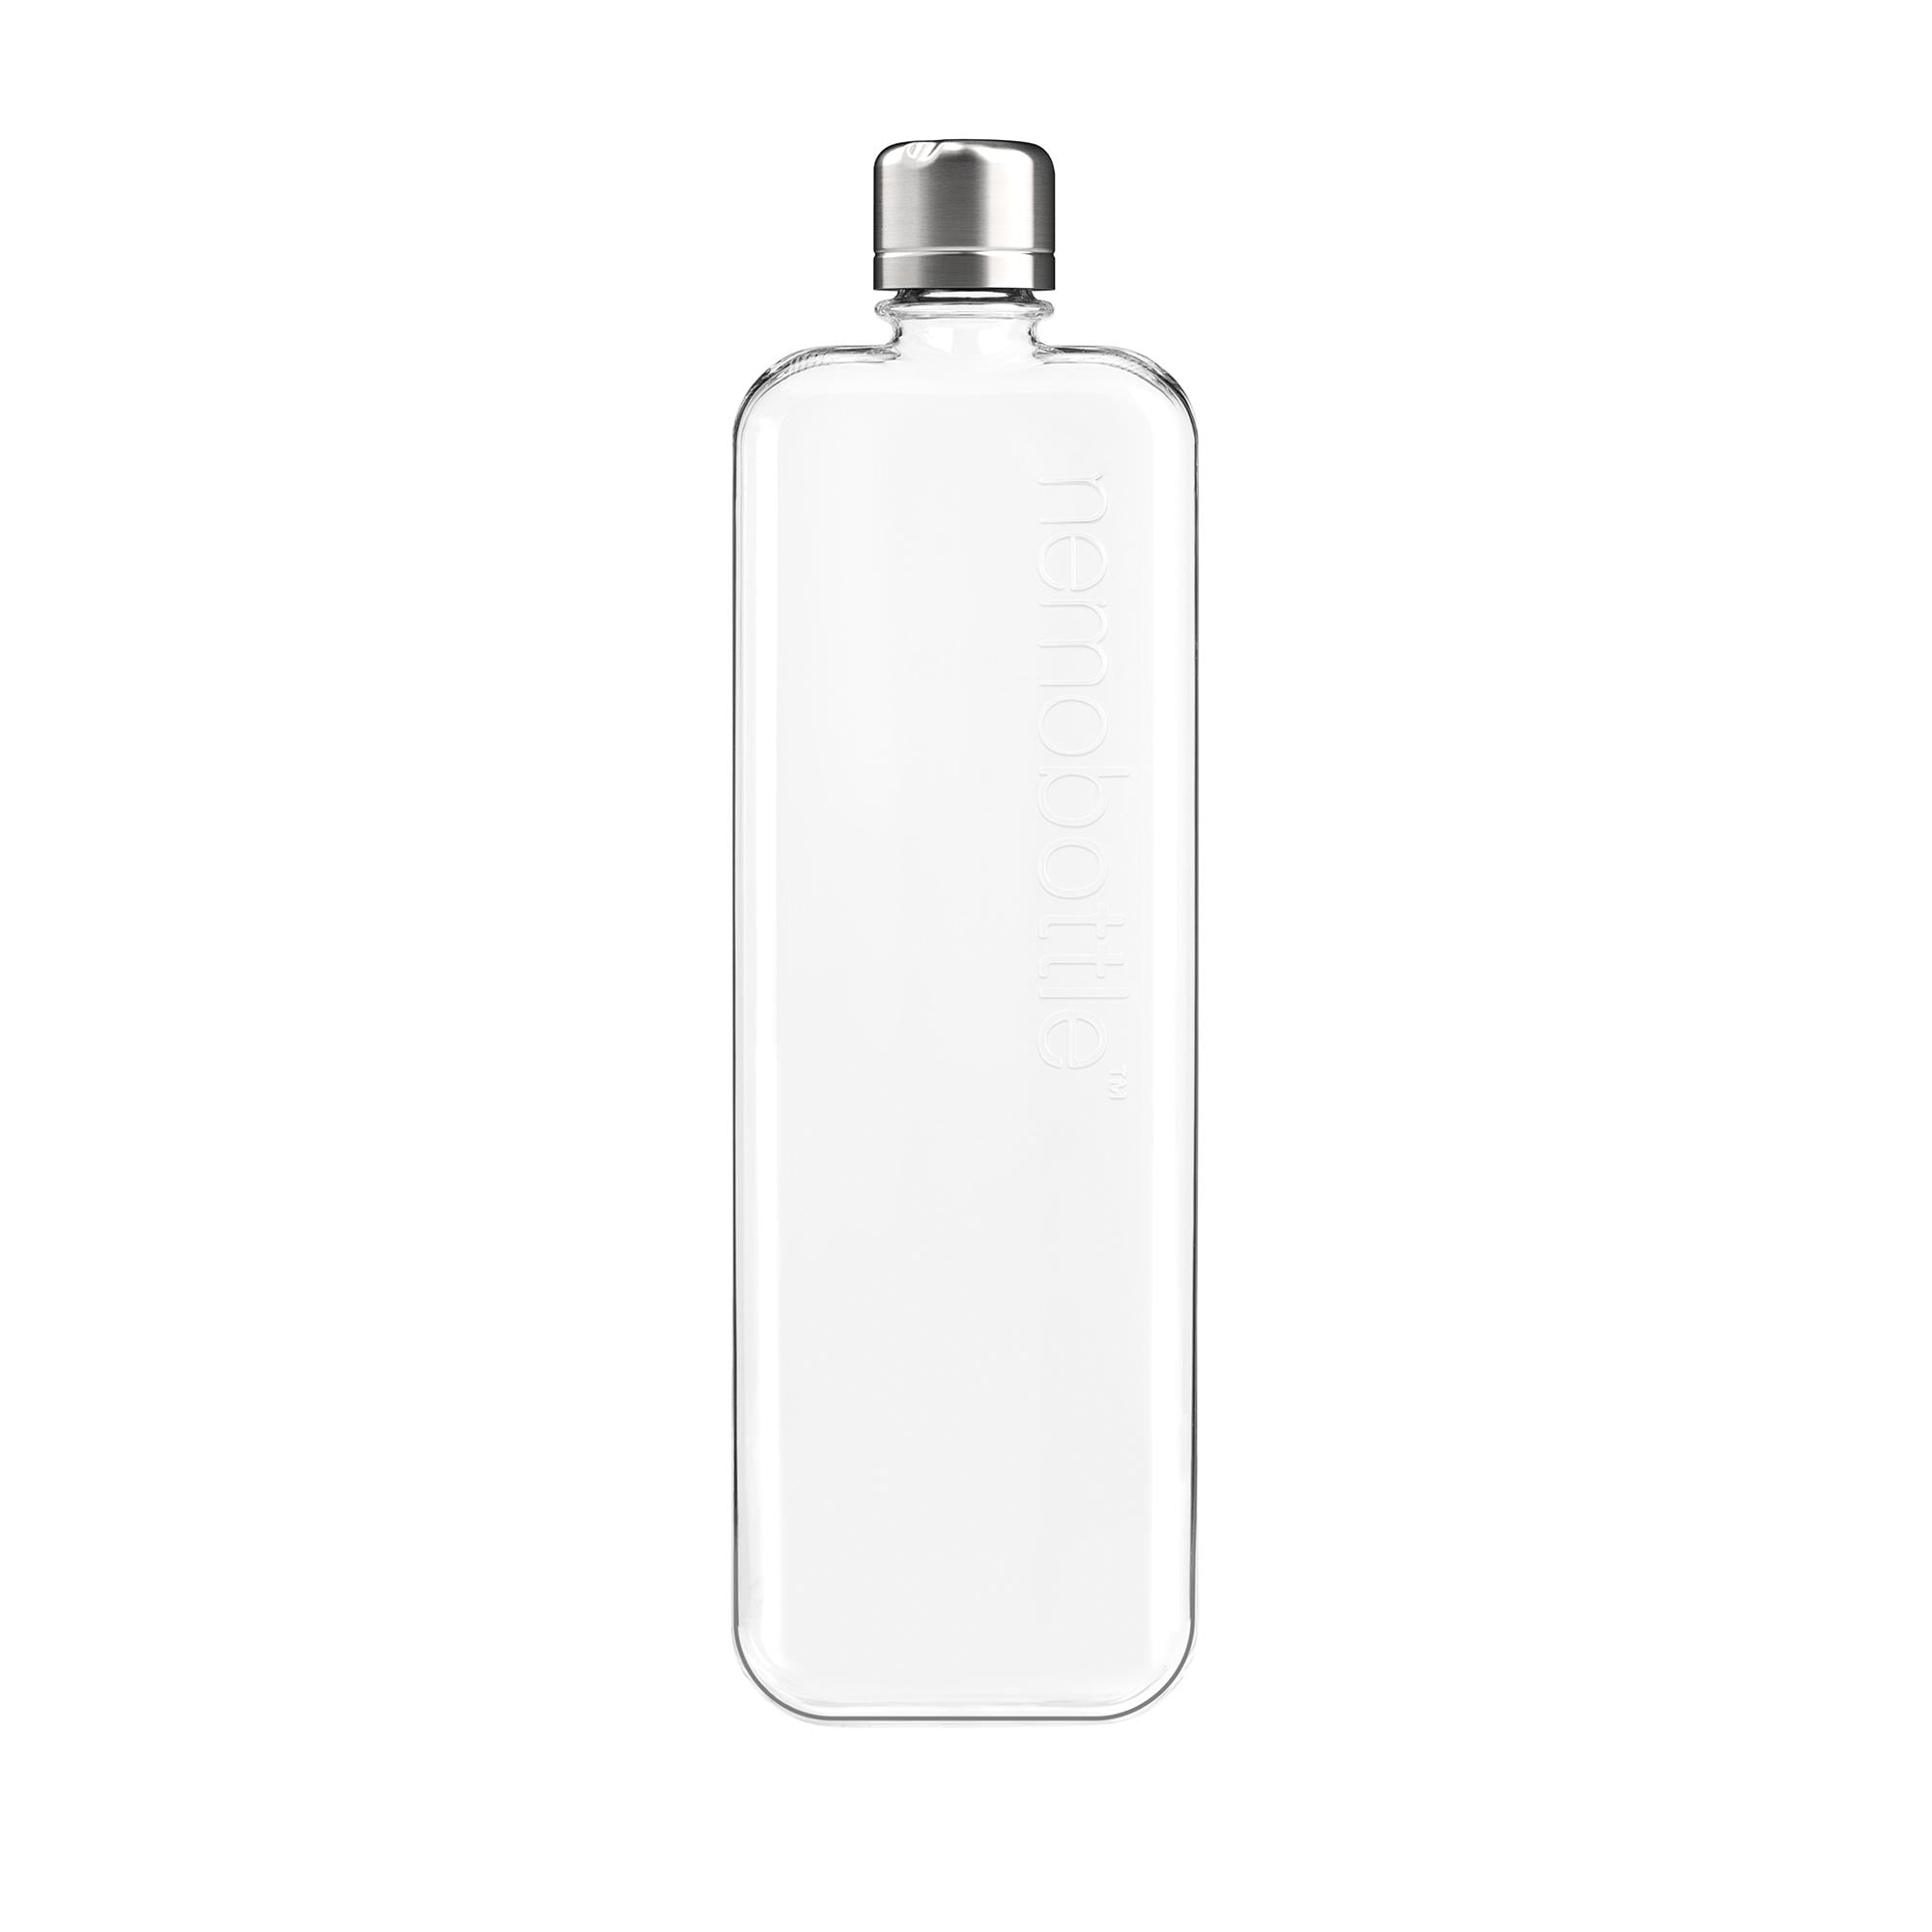 SLIM memobottle -15oz (450ml) The Simple Modern Water Bottle